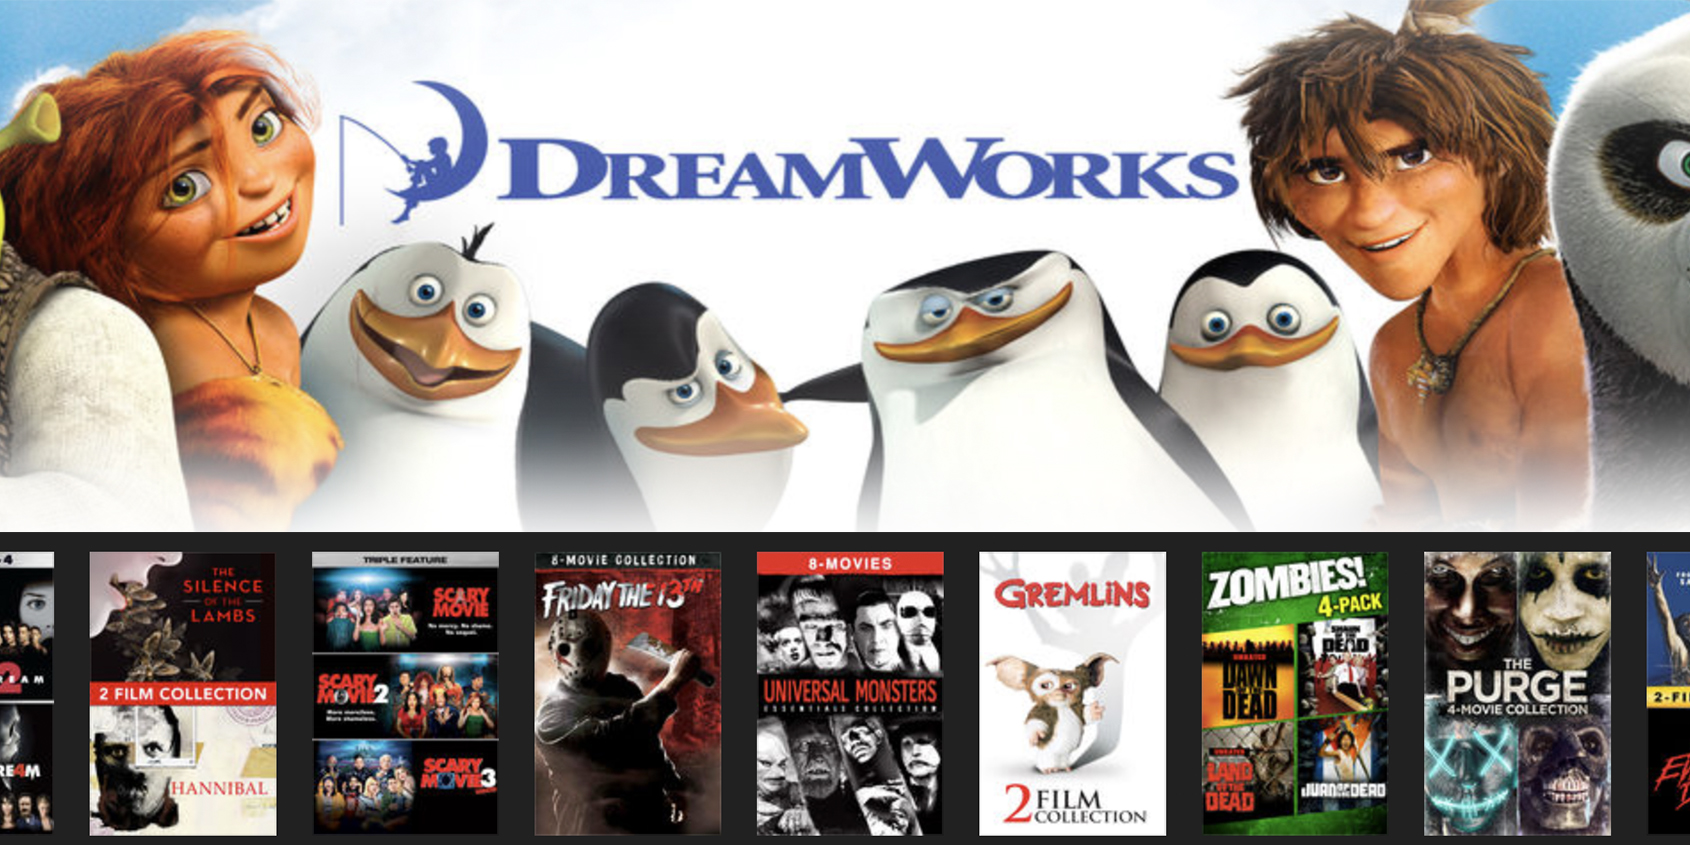 iTunes kicks off movie bundle sale from $10 plus DreamWorks films $8 ...